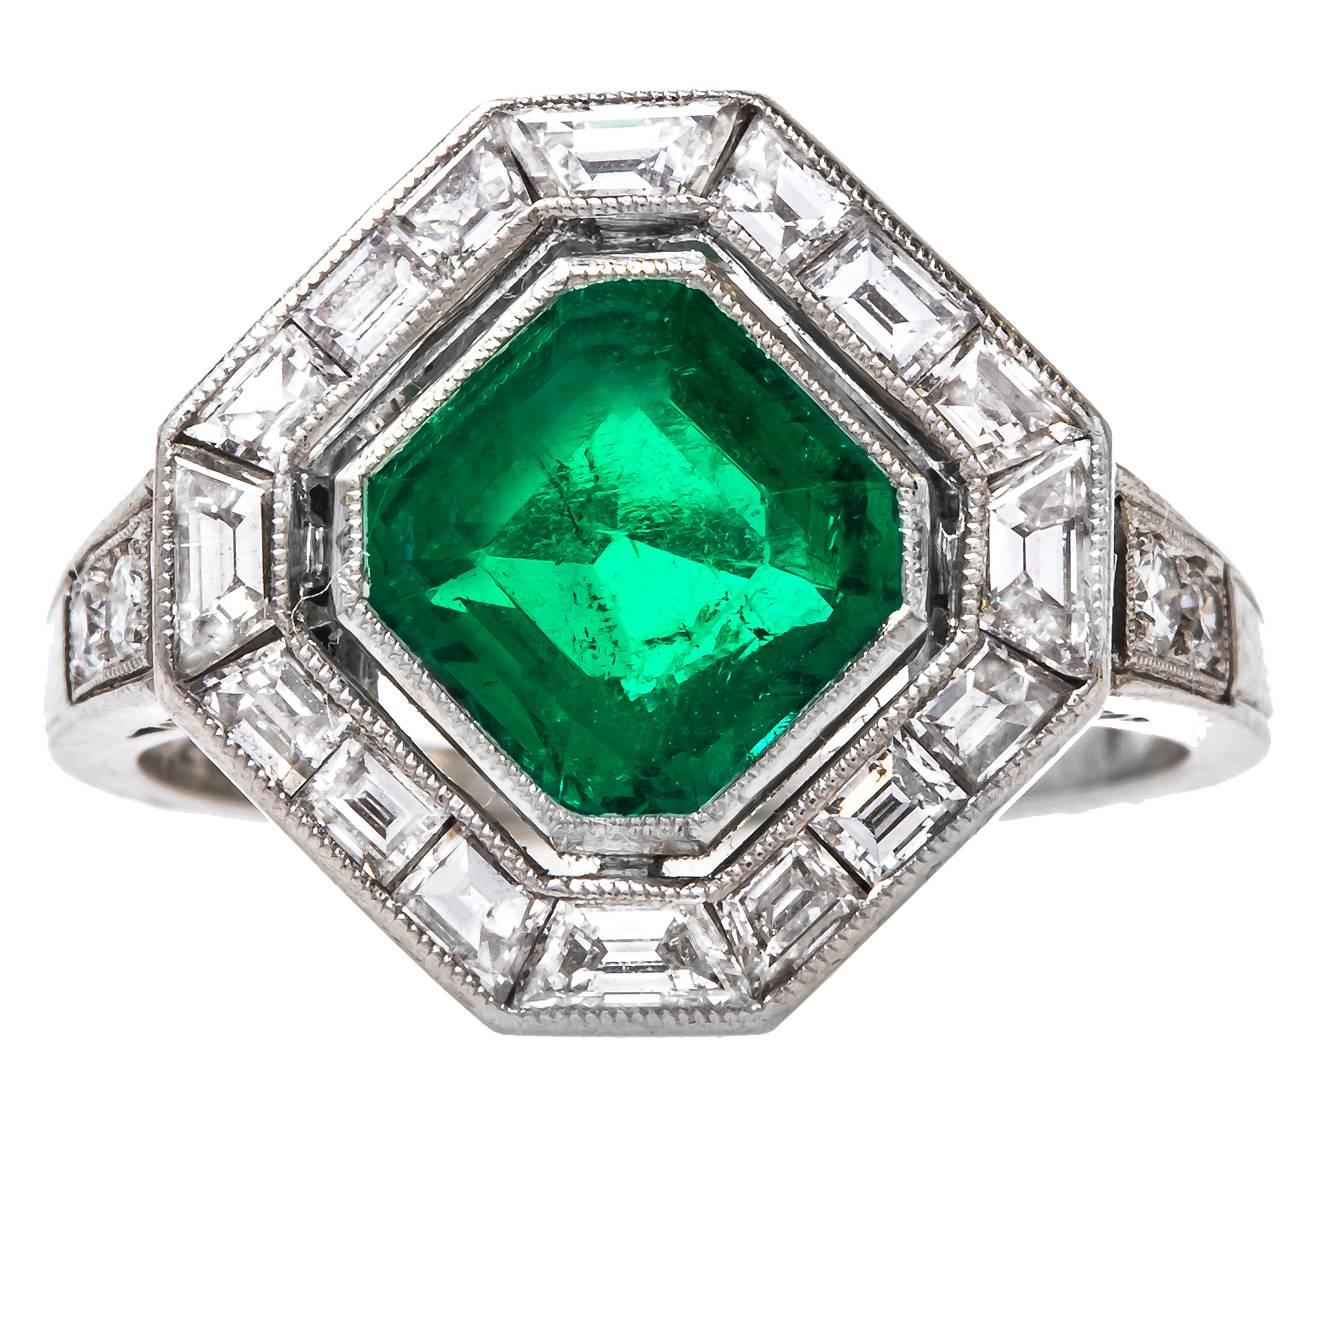 CARTIER Art Deco Emerald Diamond Platinum Art Deco Engagement Ring For Sale